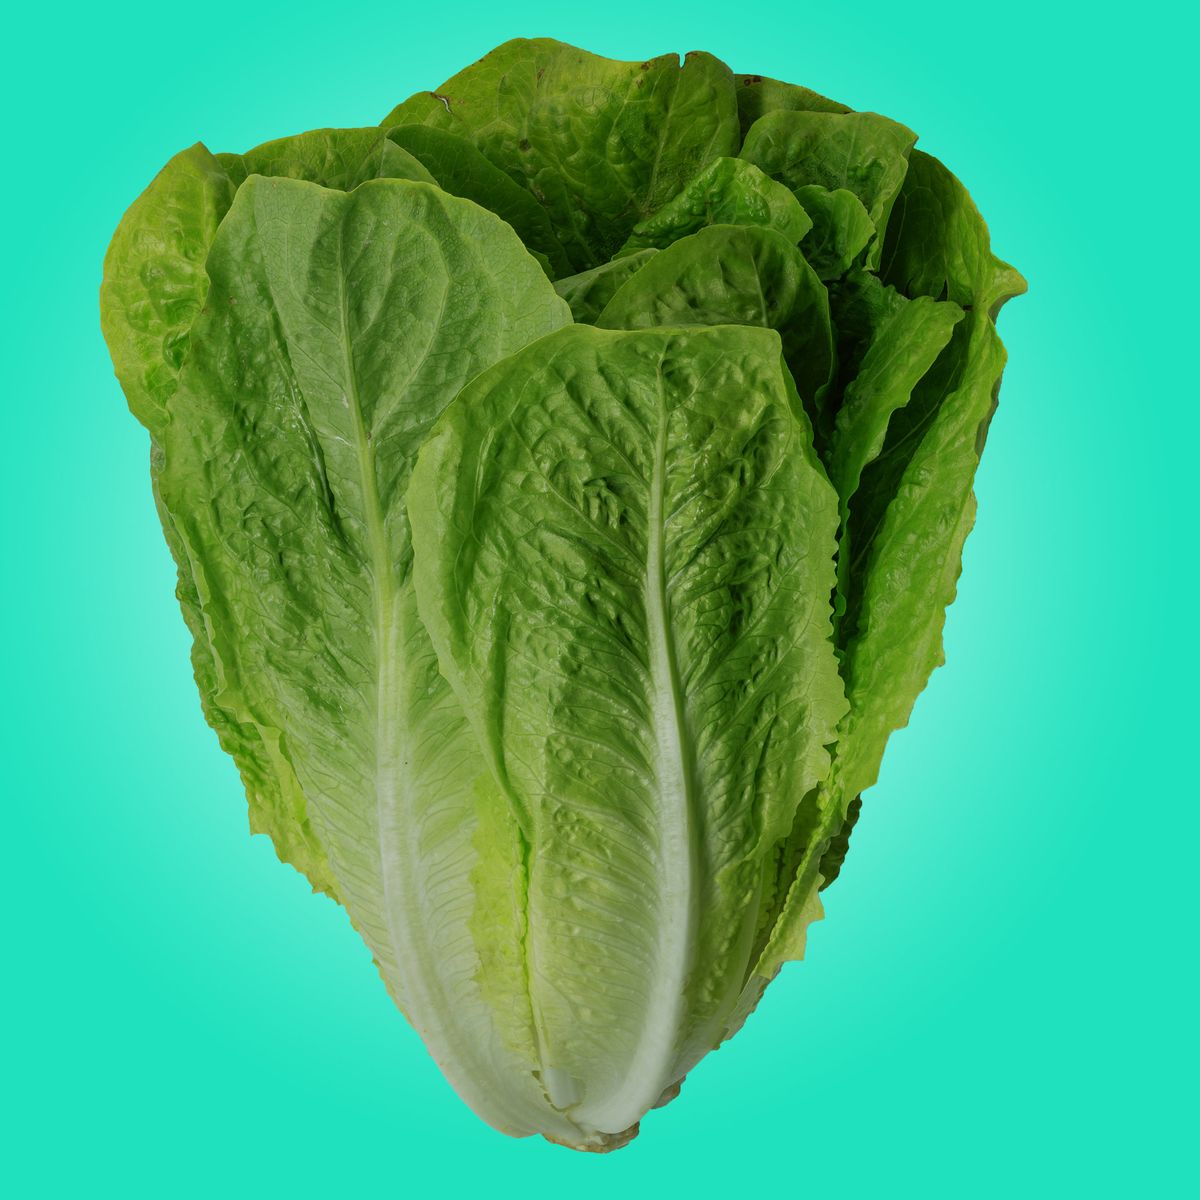 Lettuce перевод на русский. Romaine lettuce. Lettuce перевод. Капуста Ромейн метро. Lettuce на русском.